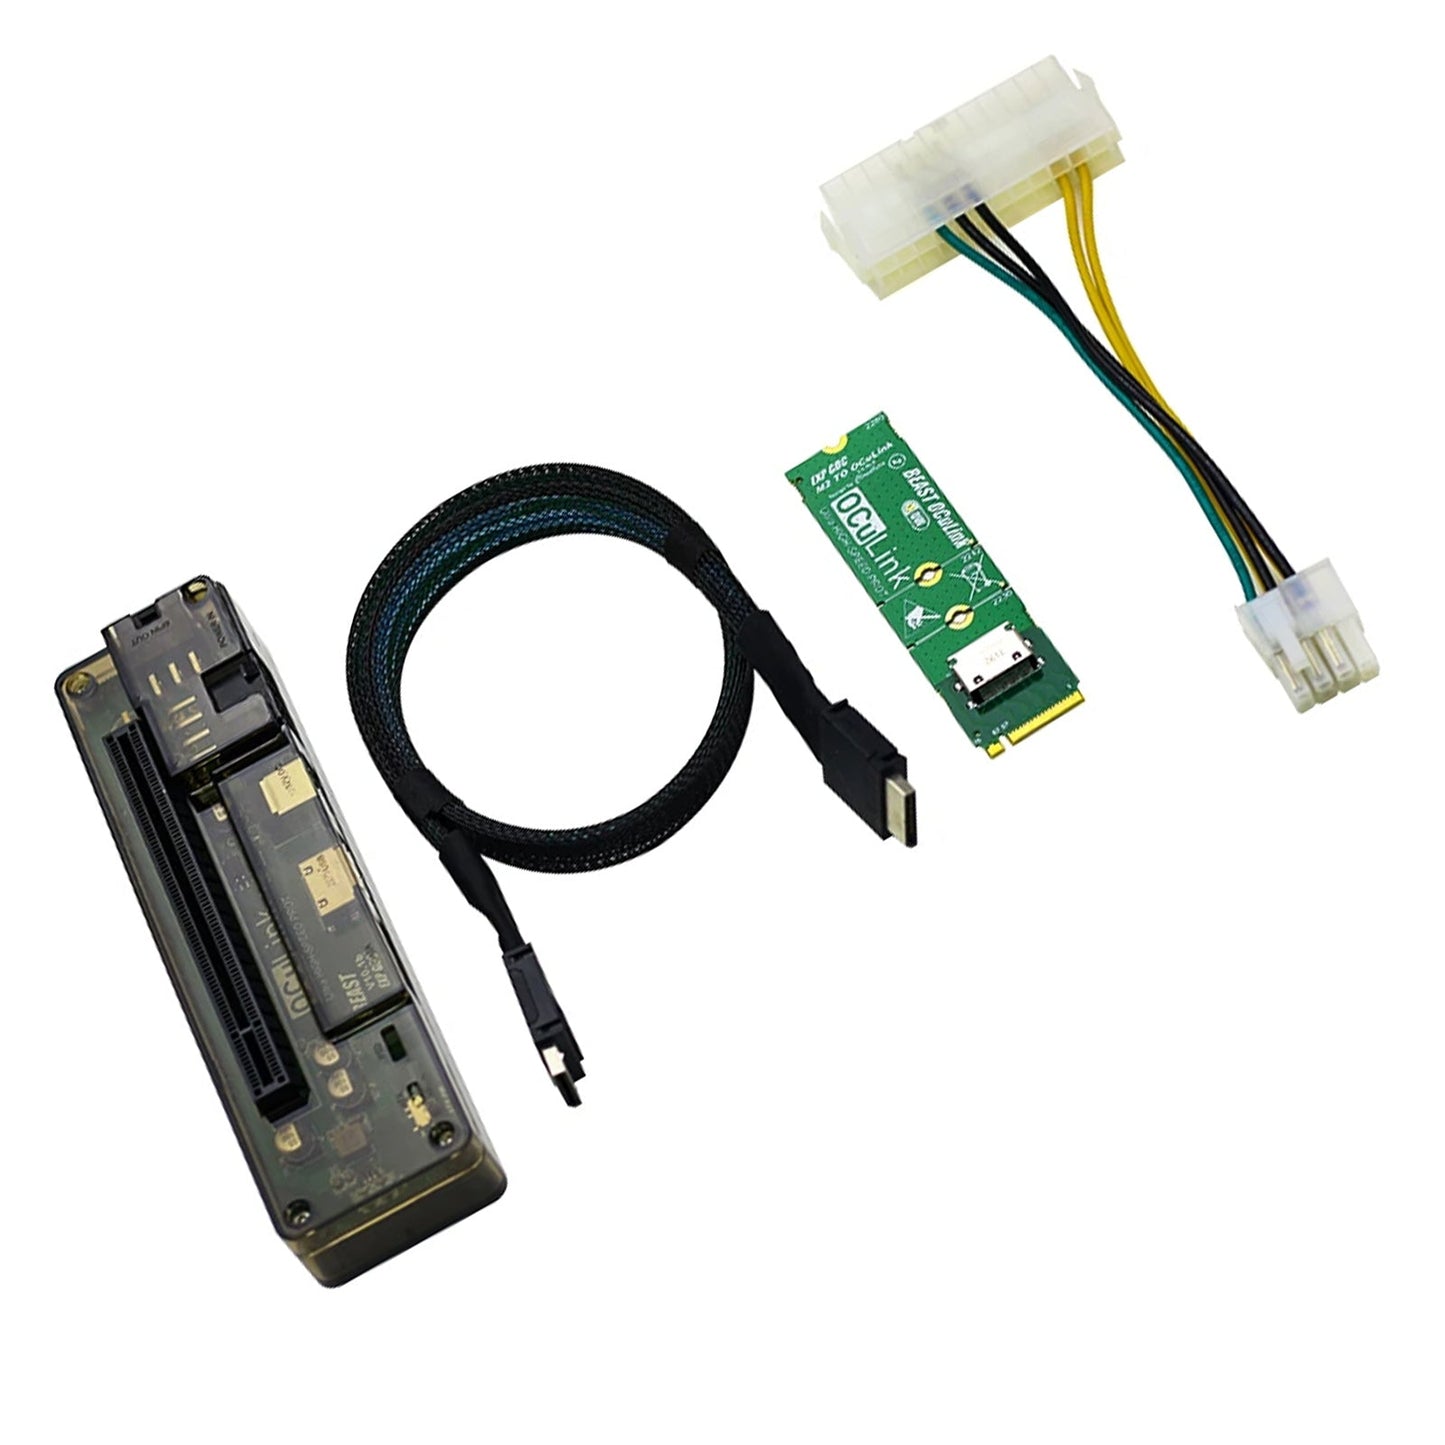 PCI-E X4 M.2 auf OCULINK Adapterplatine, externe Grafikkarte, Laptop-Dockingstation